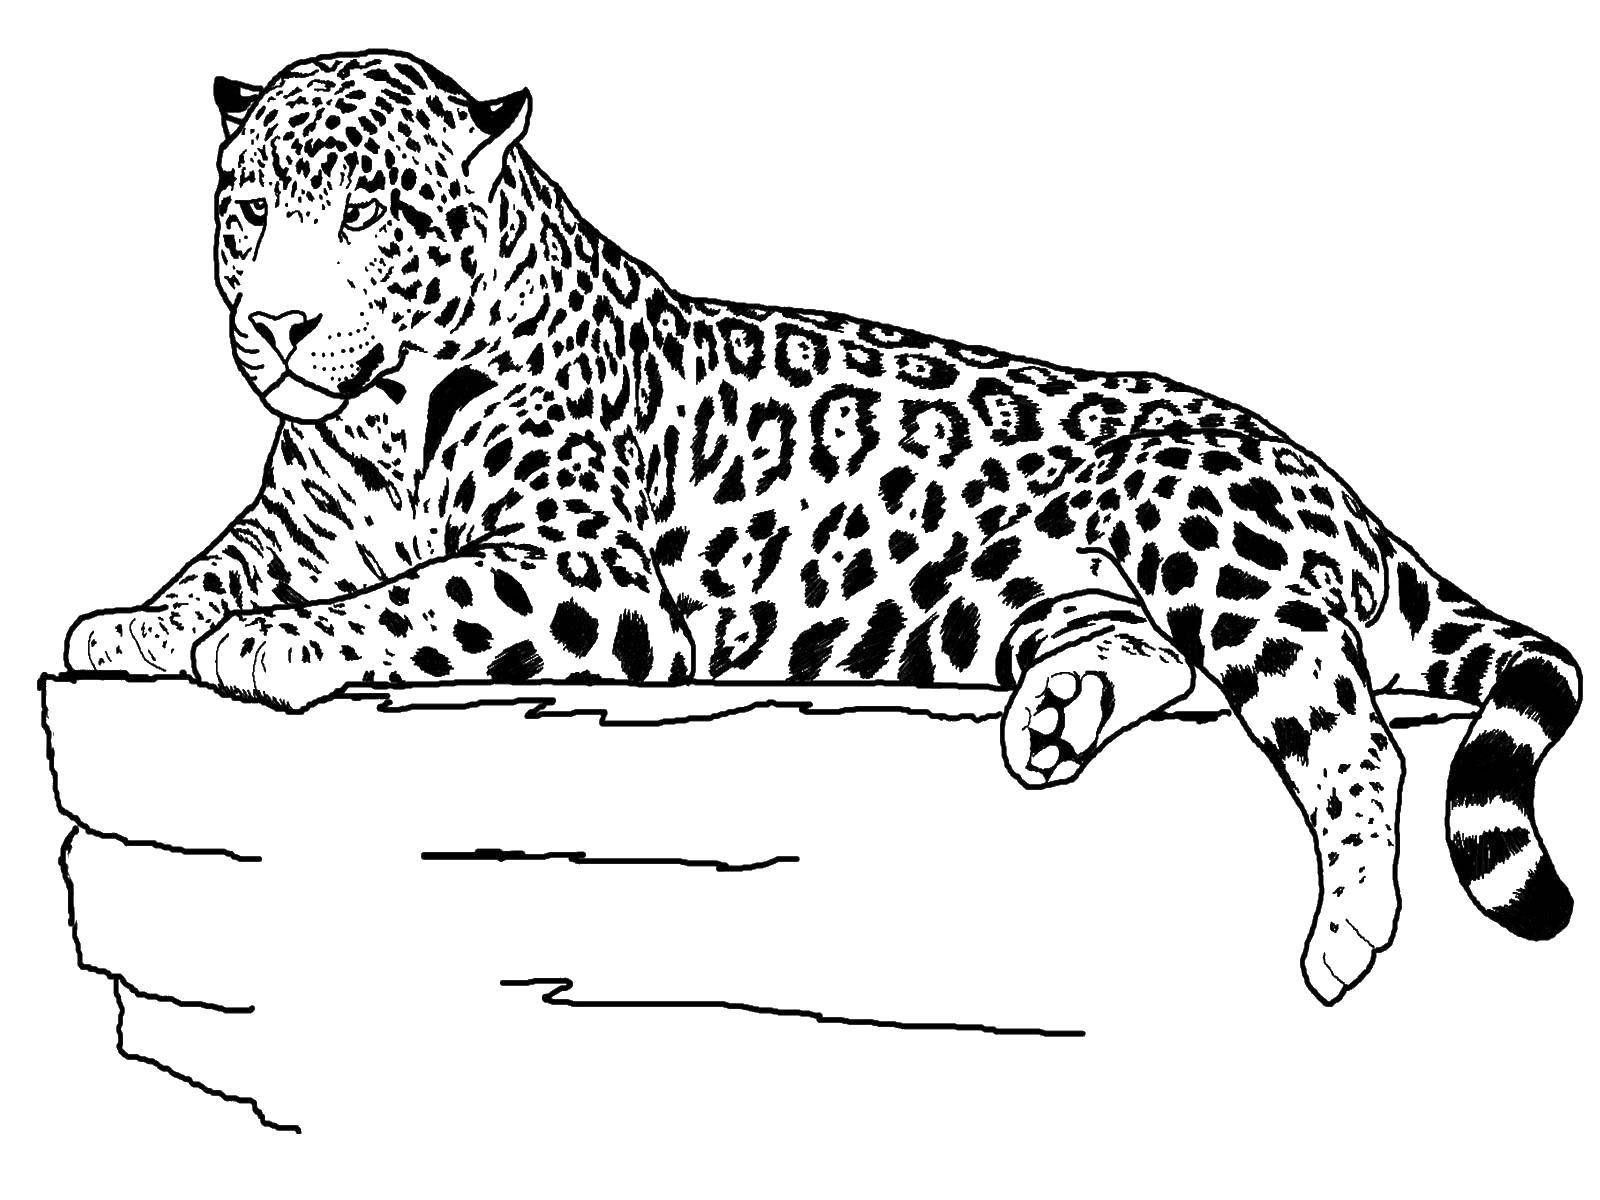 Переднеазиатский леопард рисунок